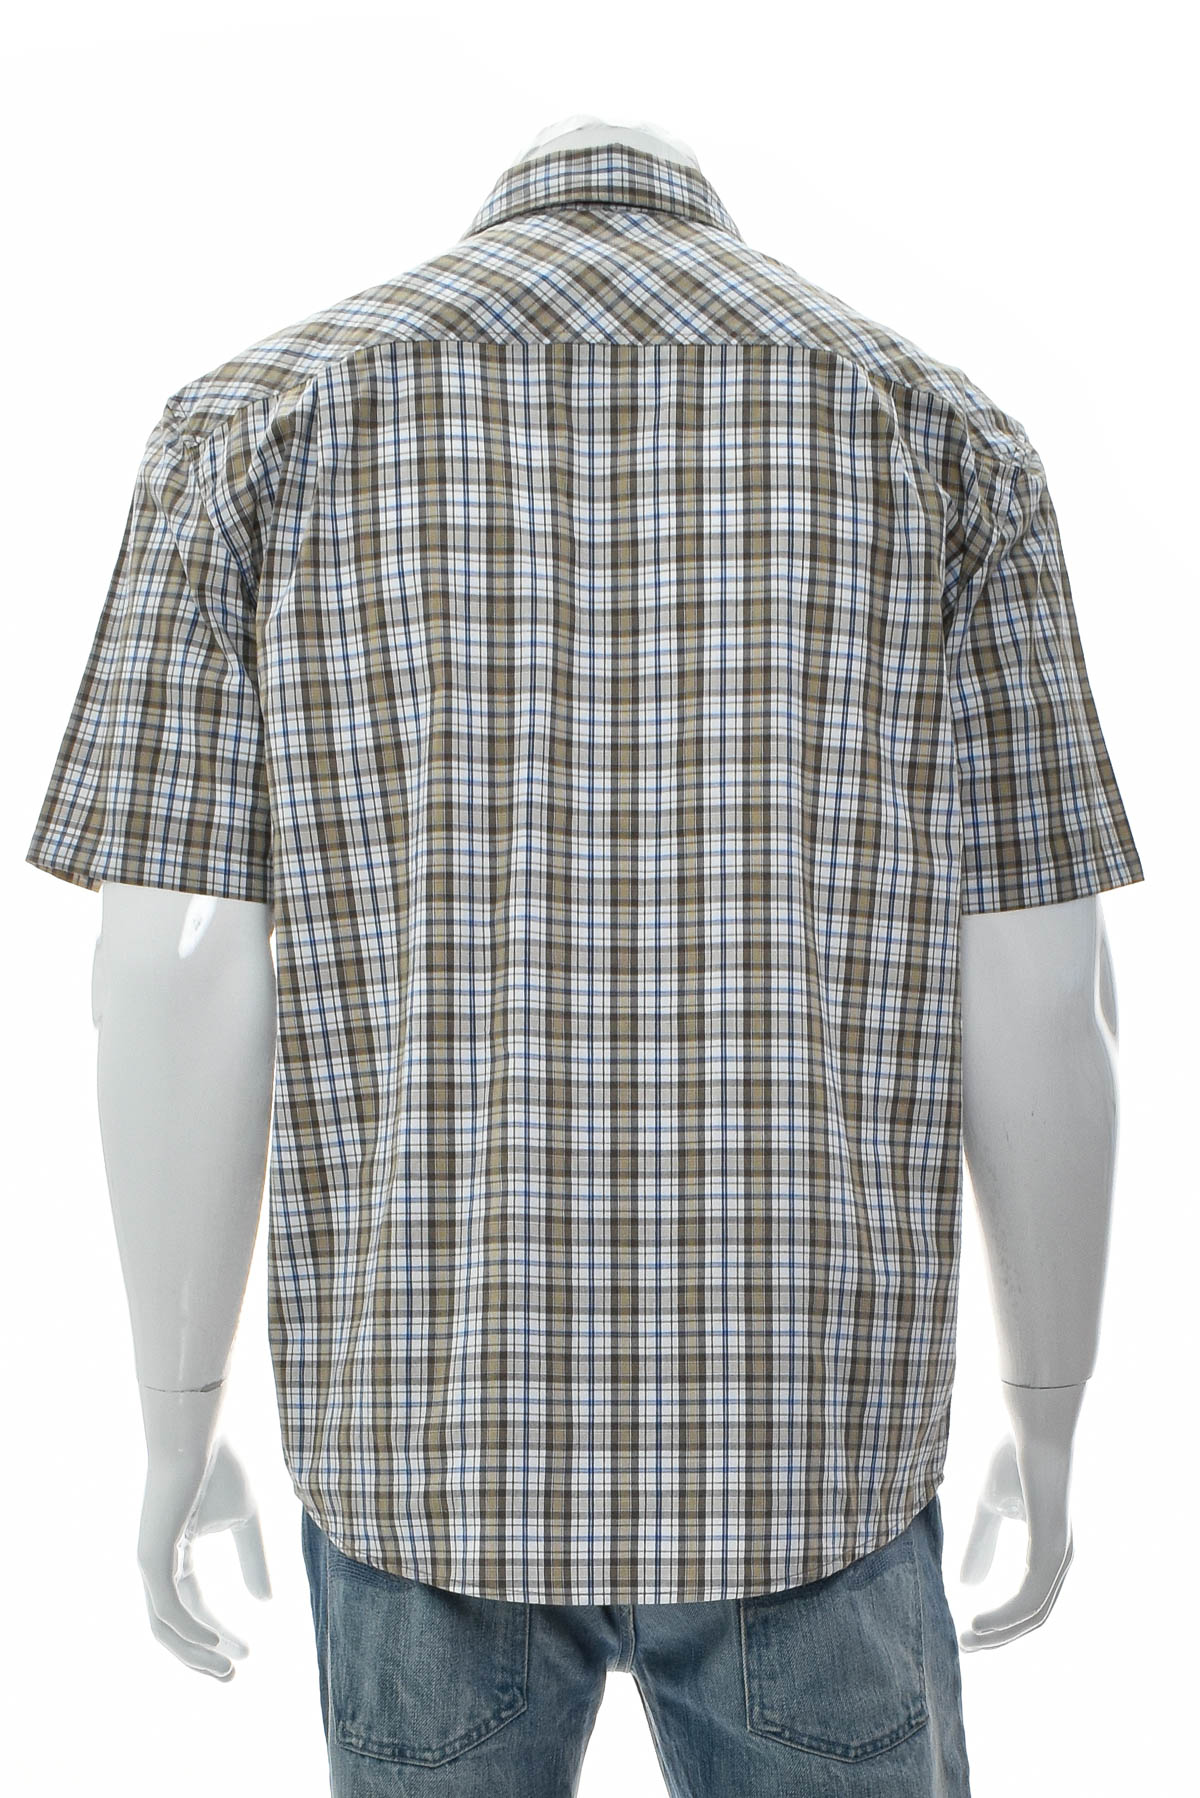 Men's shirt - Crane - 1